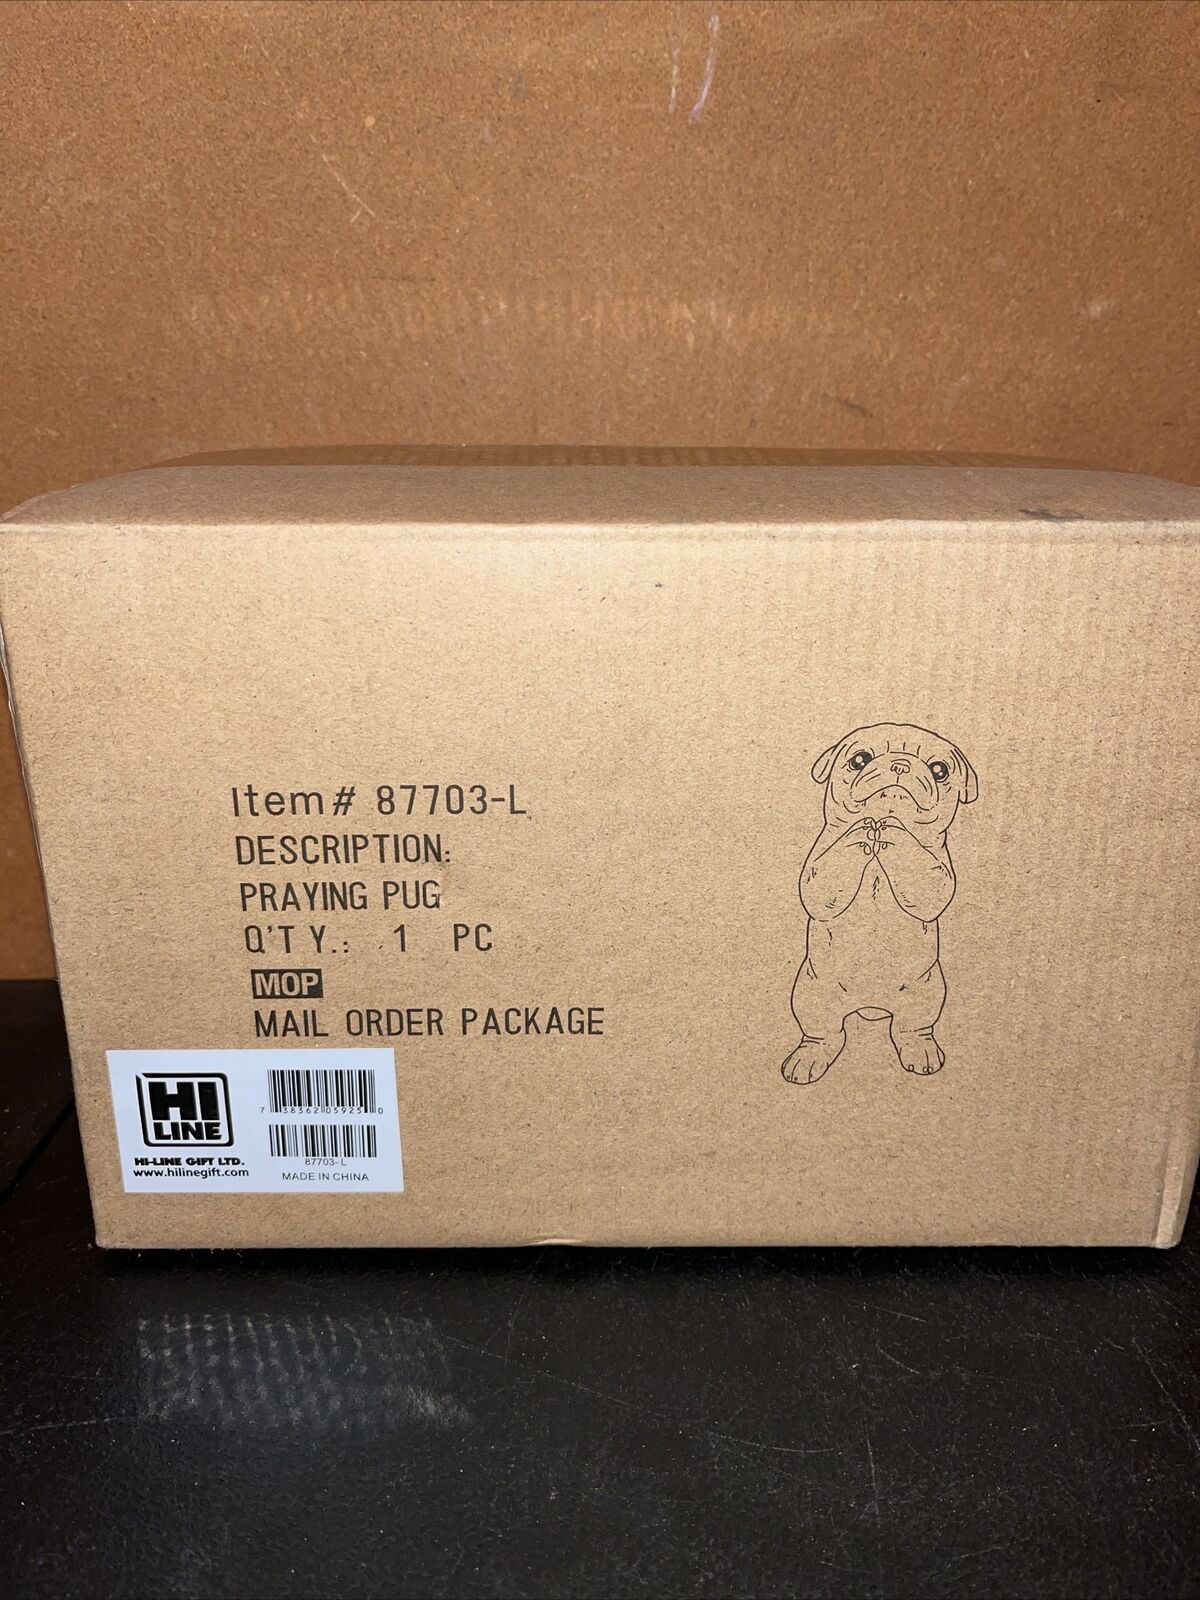 Hi-Line Gift Ltd 87703-L Praying Pug Puppy Statue, 8.35-inch Height